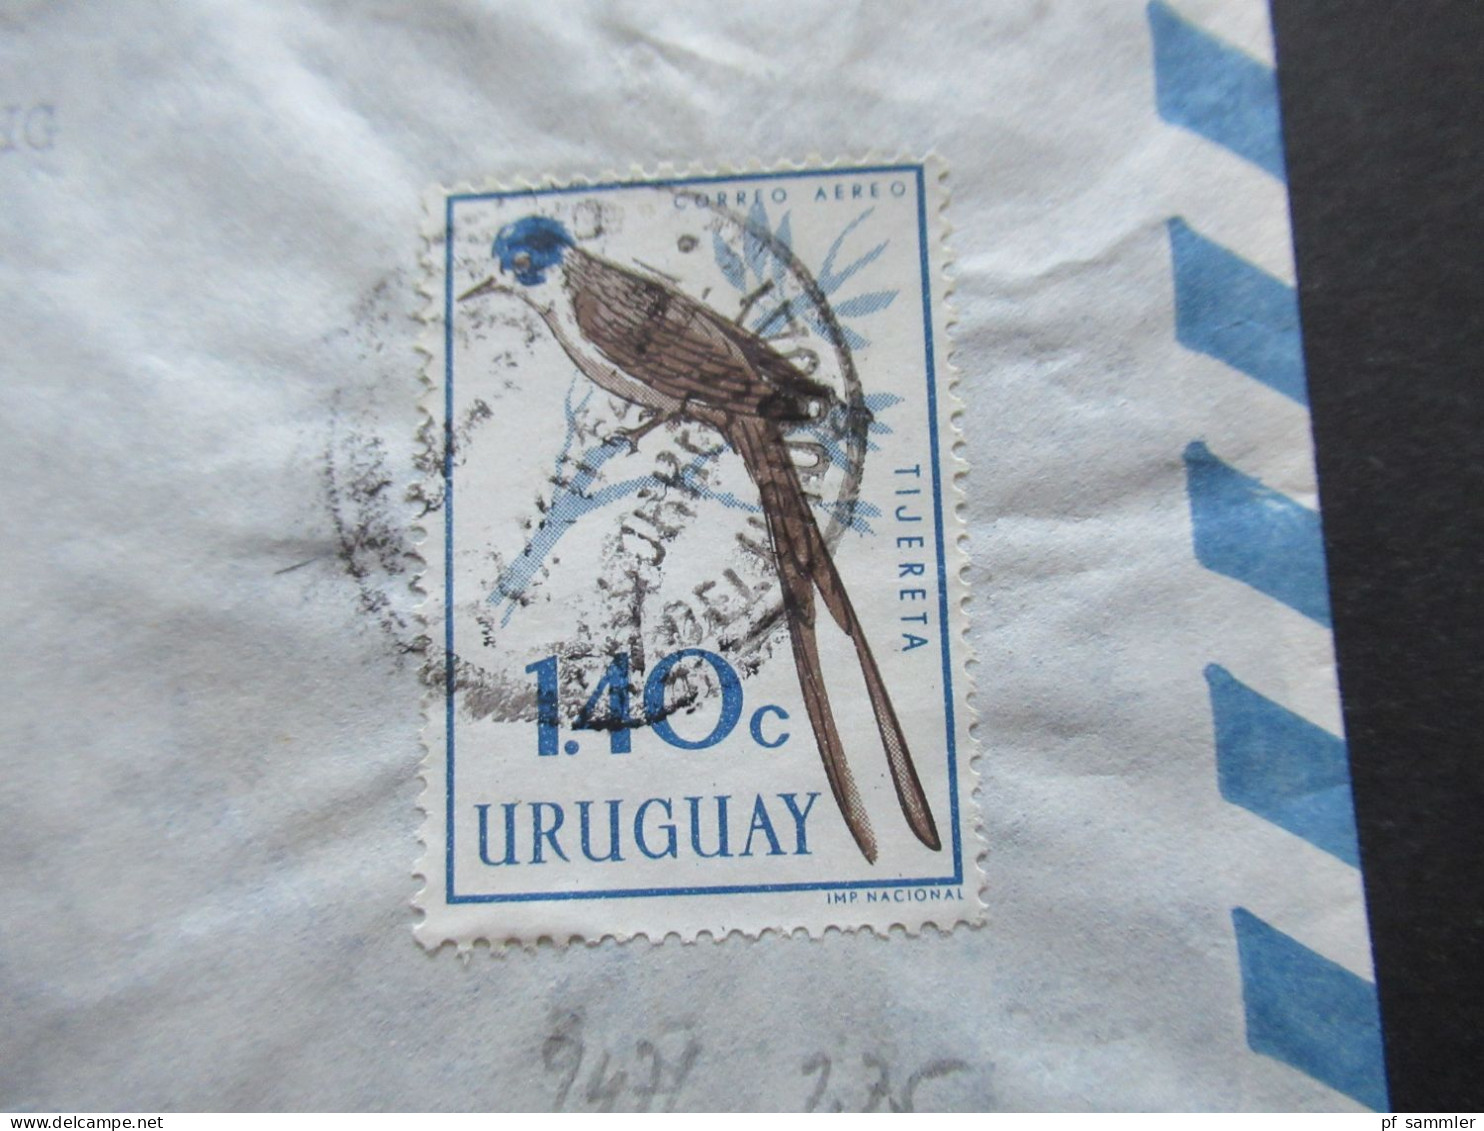 Südamerika Uruguay Via Aerea Luftpost Um 1965  2x Auslandsbrief Nach Menden Motivmarke Vogel Tijereta - Uruguay